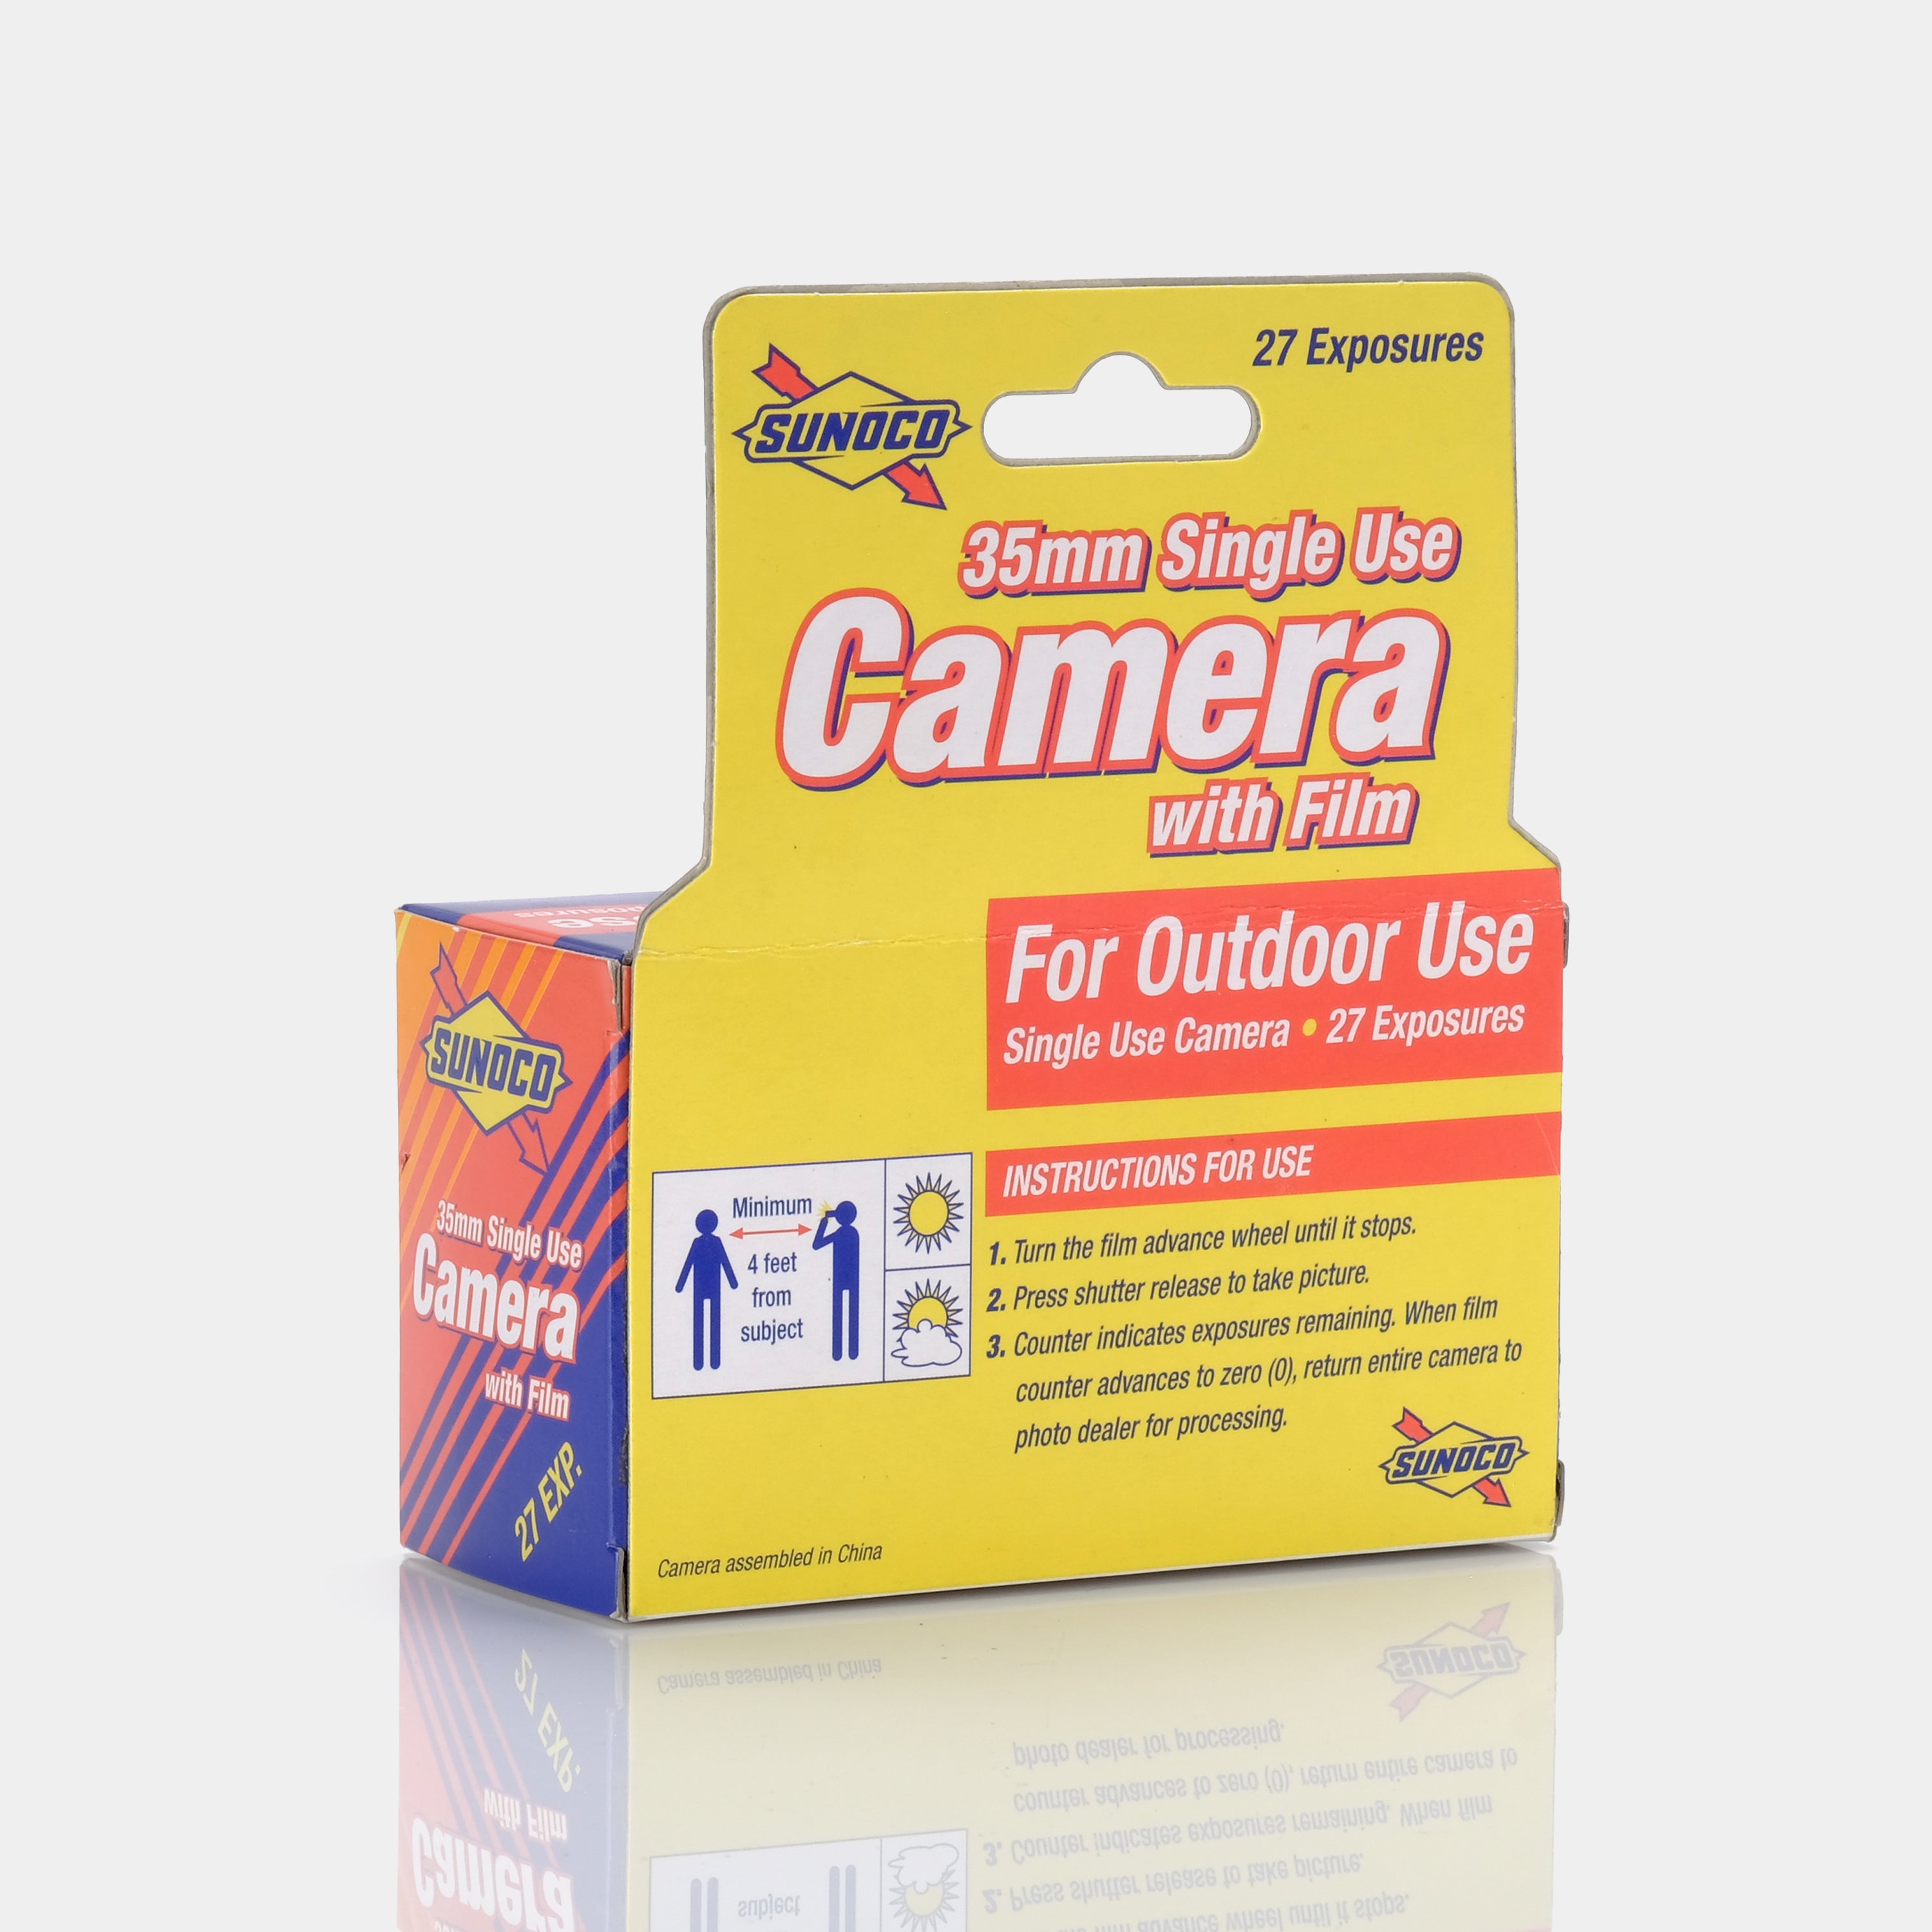 Expired Sunoco Disposable 35mm Film Camera